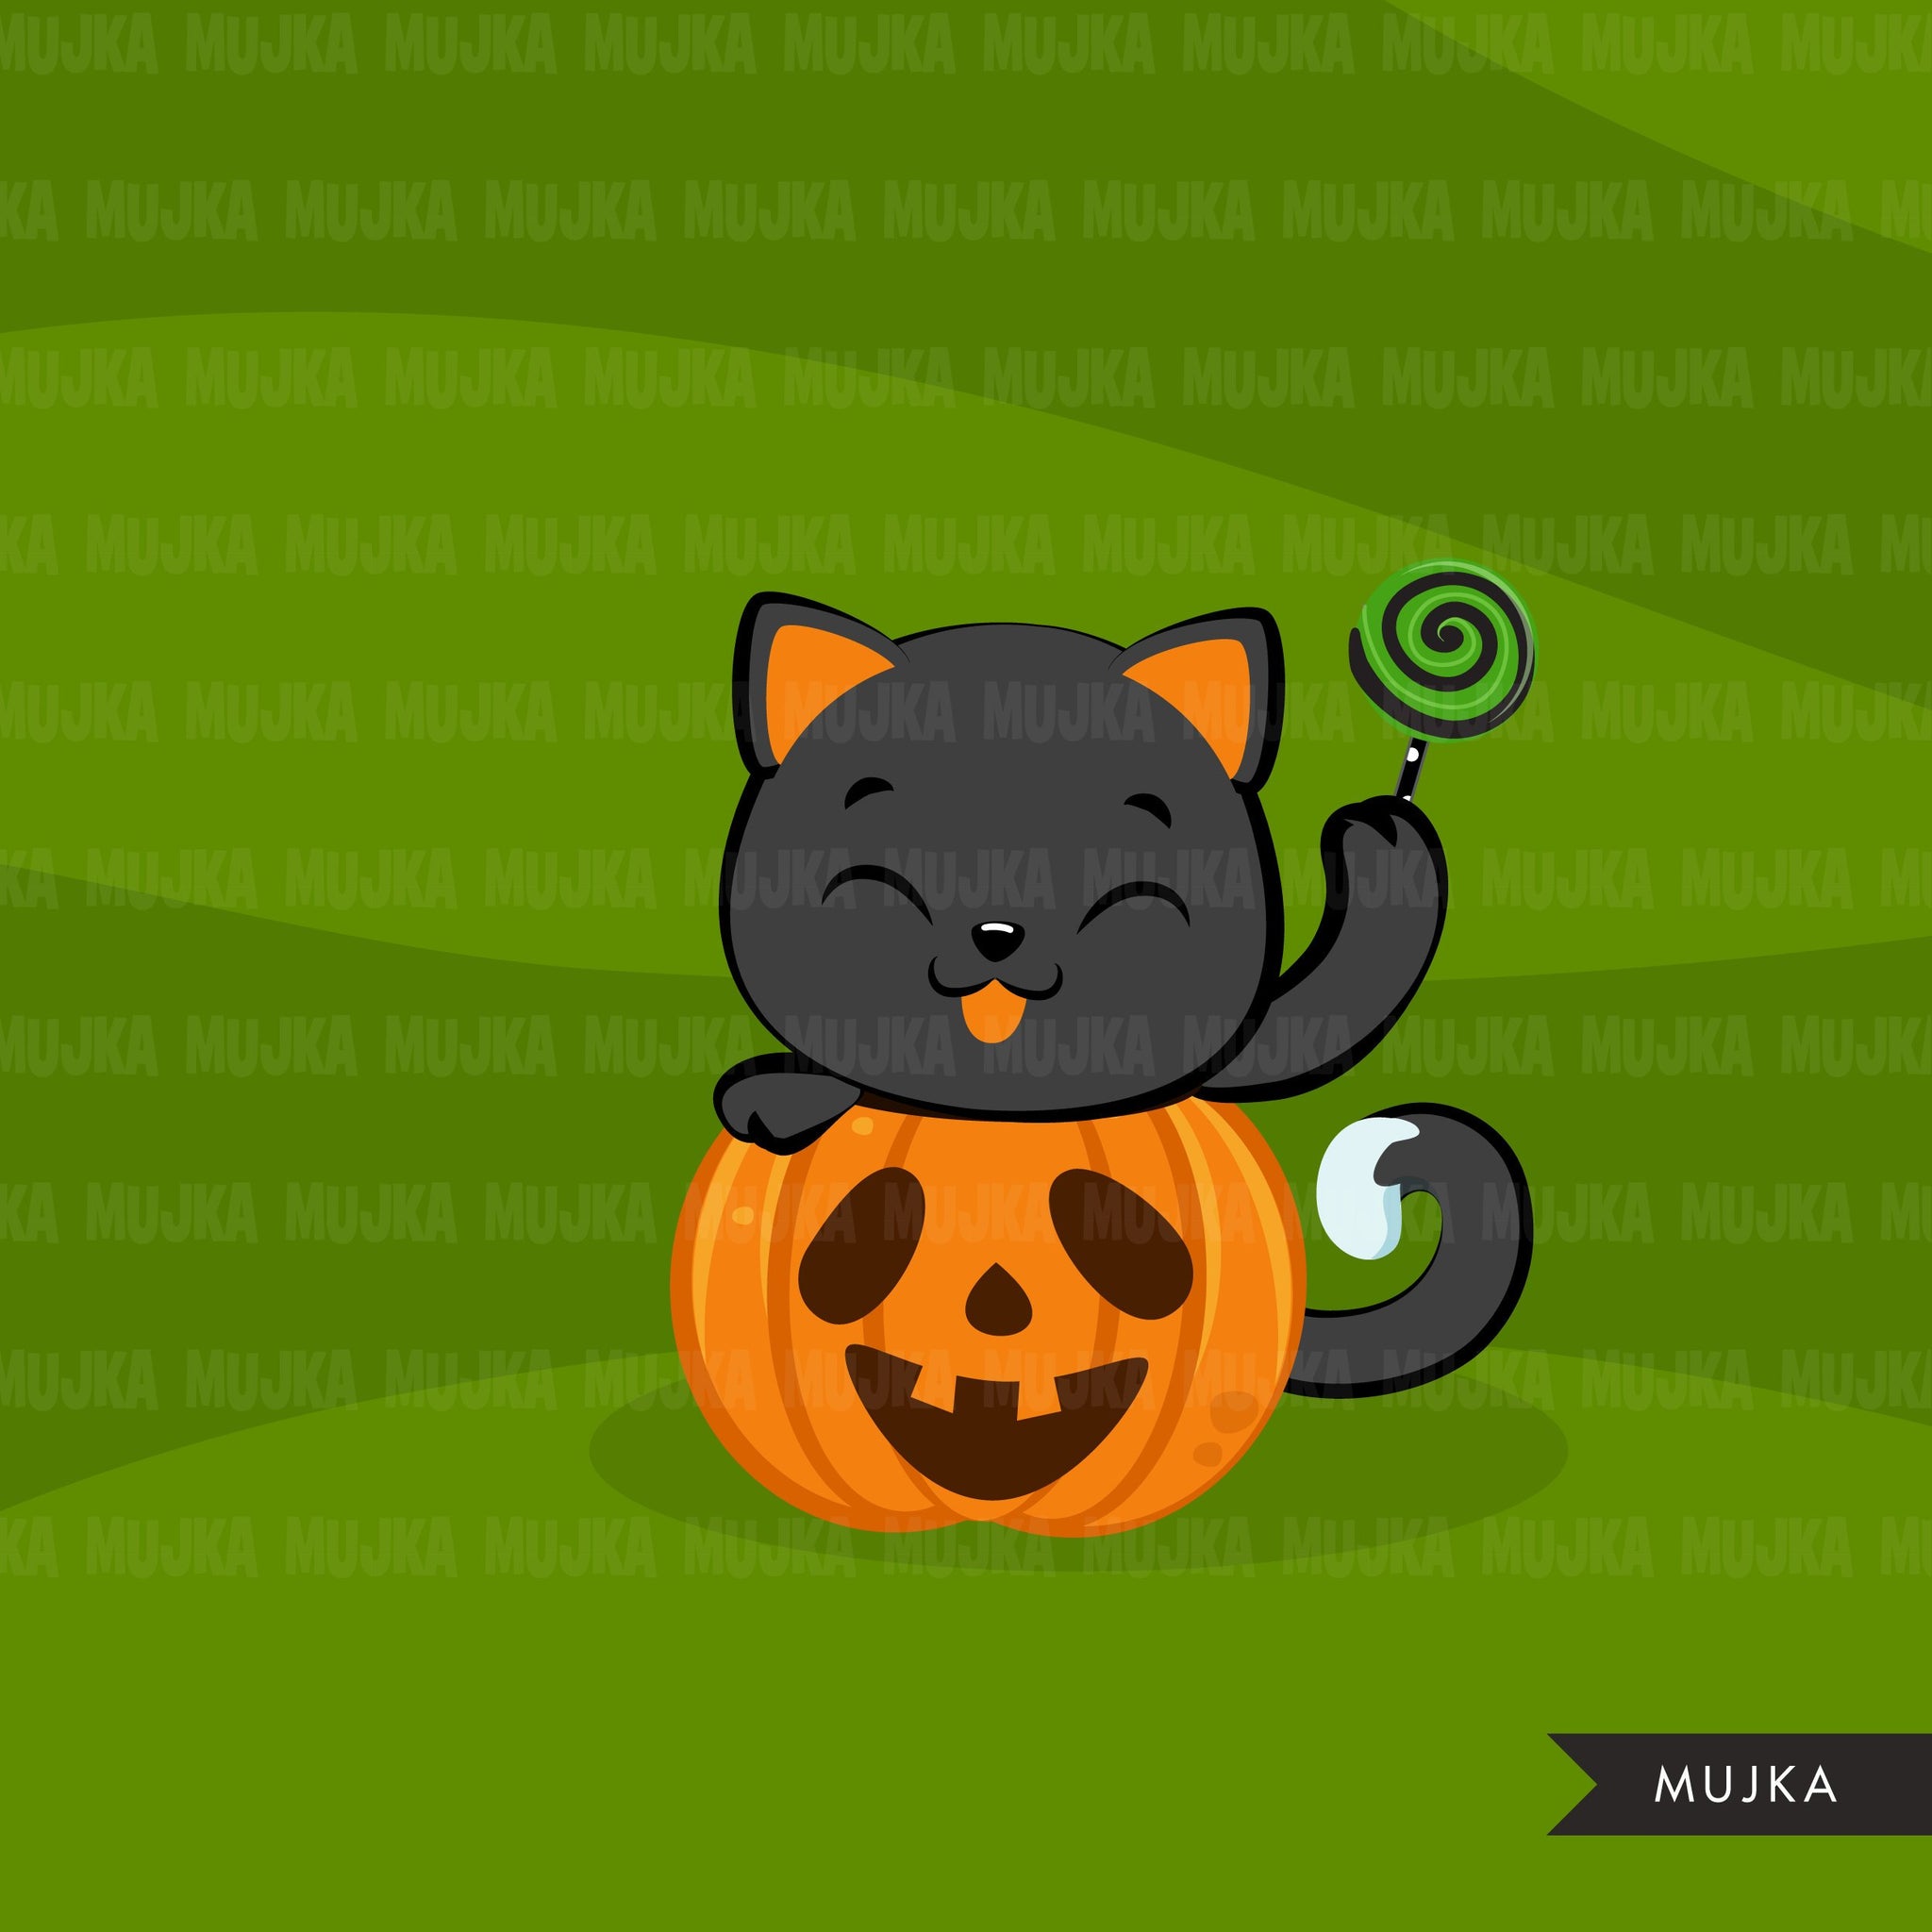 Halloween cats clipart, Black cat, trick or treat graphics, animal clip art